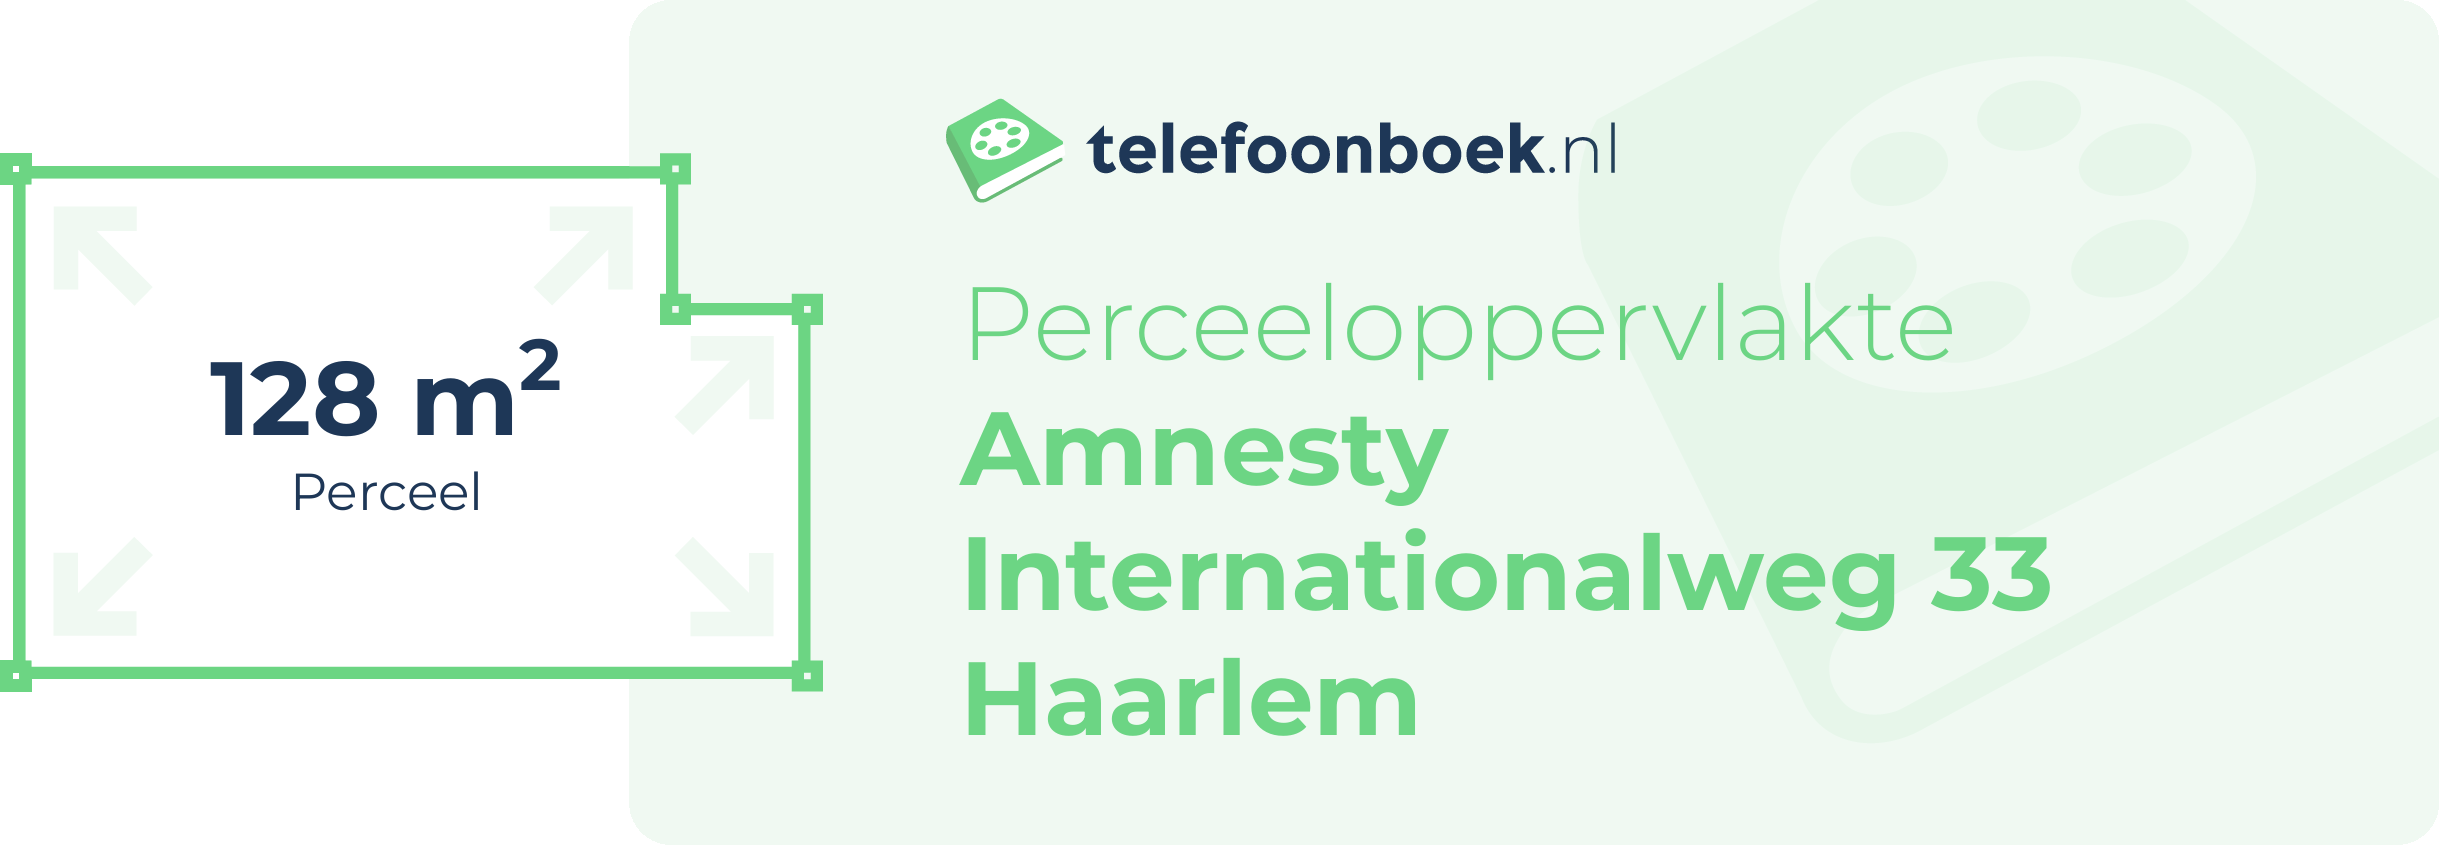 Perceeloppervlakte Amnesty Internationalweg 33 Haarlem